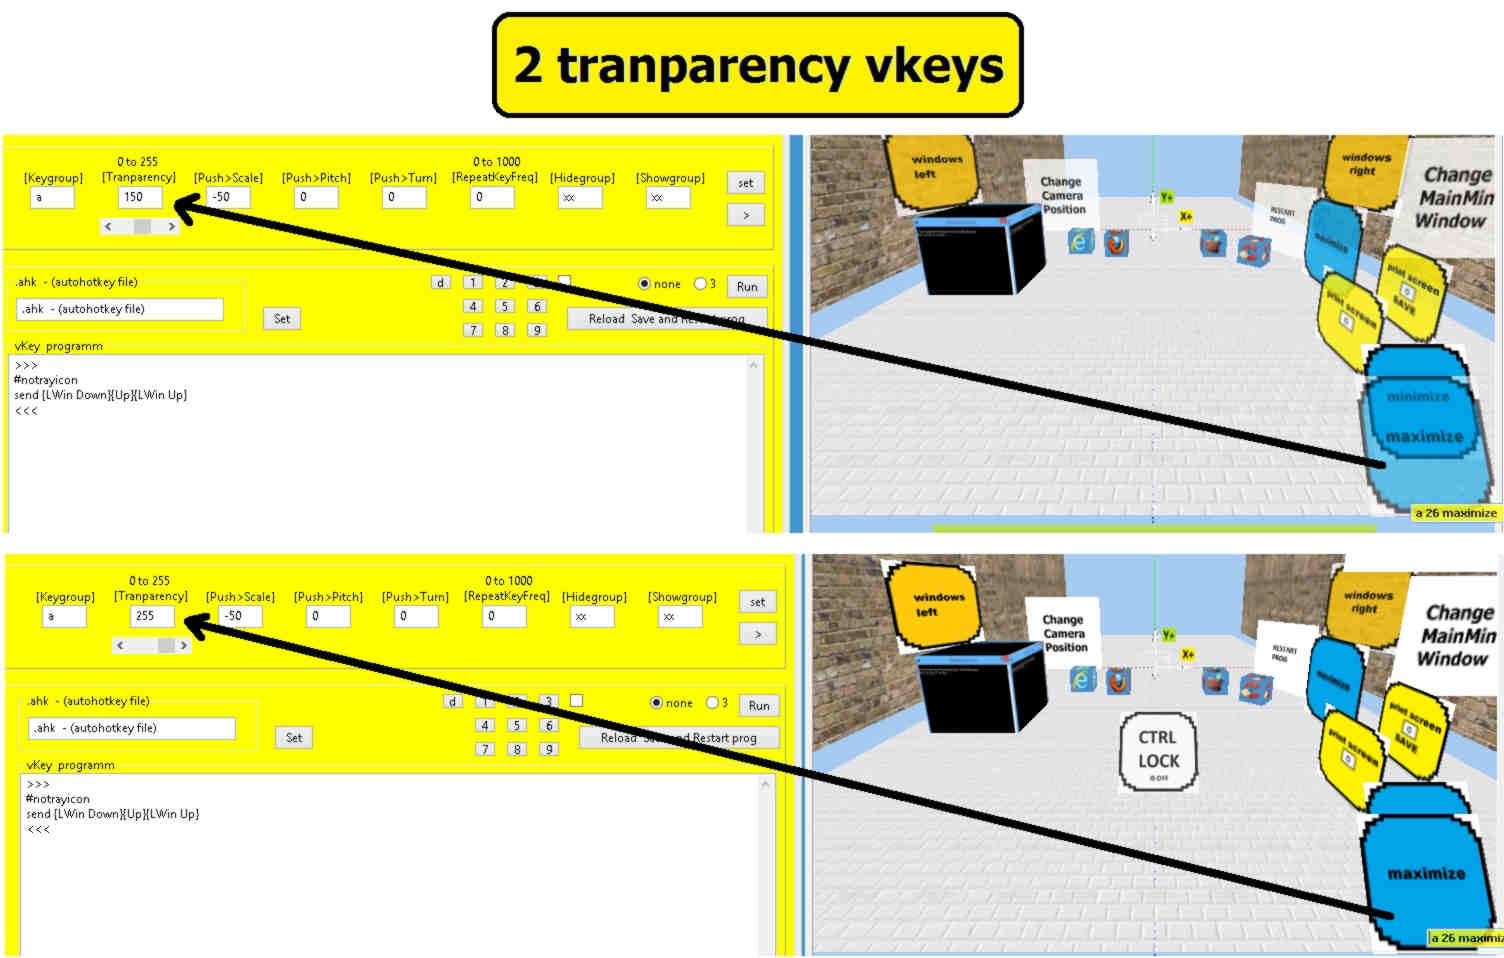 vkey transparency